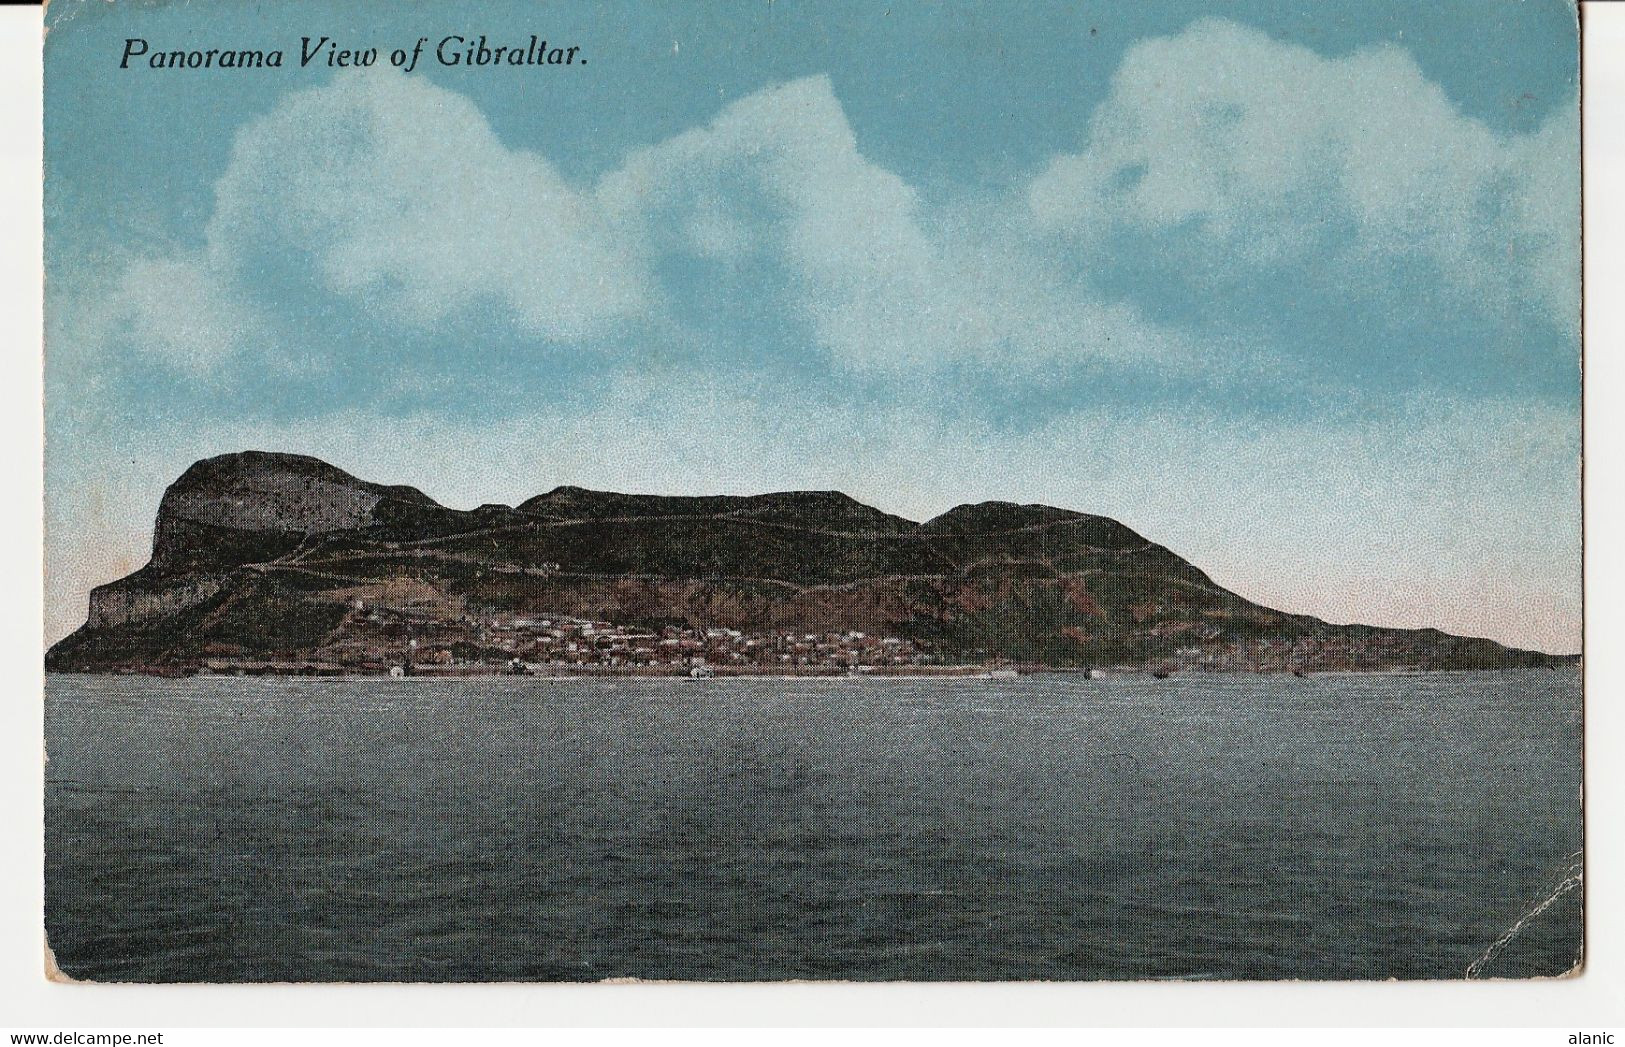 GIBRALTAR3 CPA -GIBRALTAR FROM NORTH FRONT--??//ROCK FROMTHE NEW BRIDGE CIRCULEE 1907-//PANORANA VIEW - Gibilterra